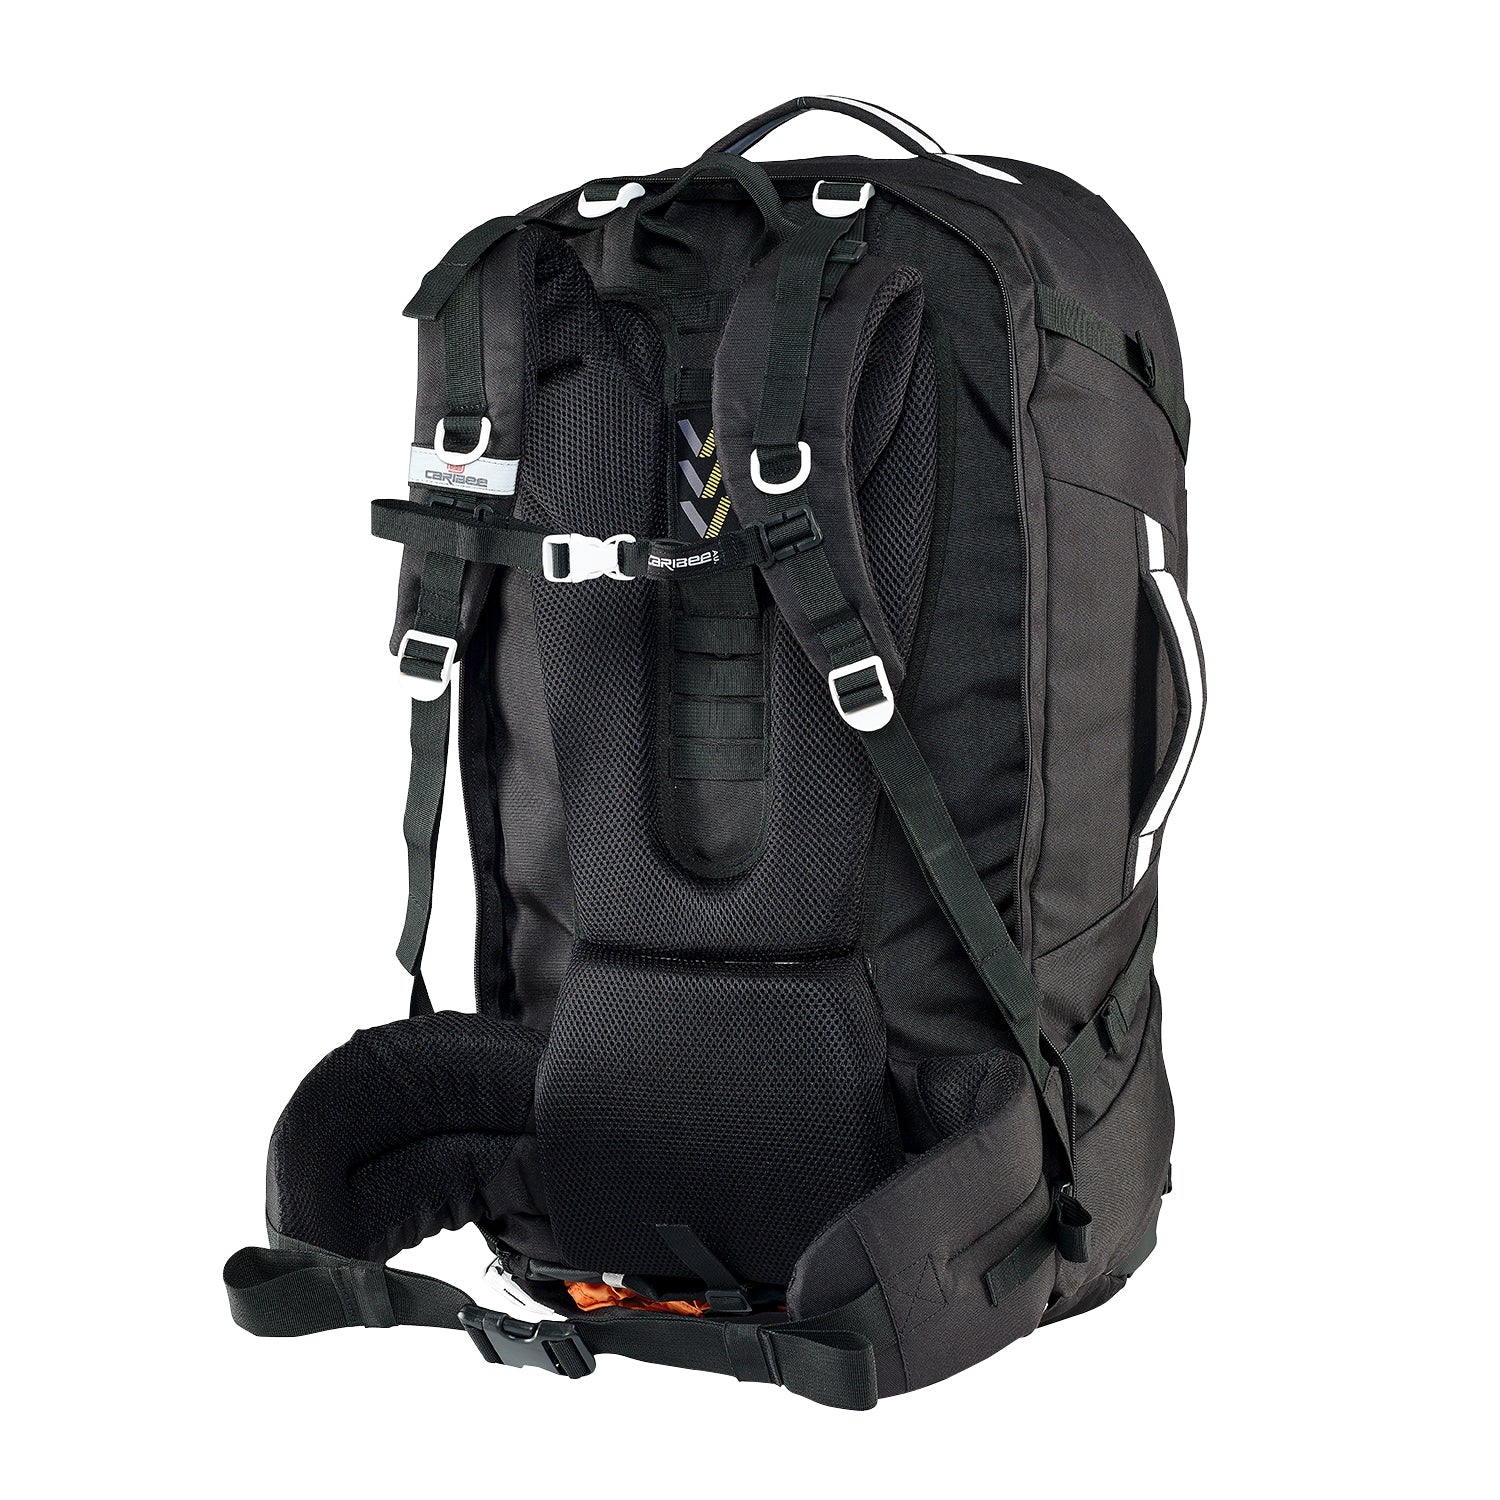 Caribee Journey 65L travel pack black harness